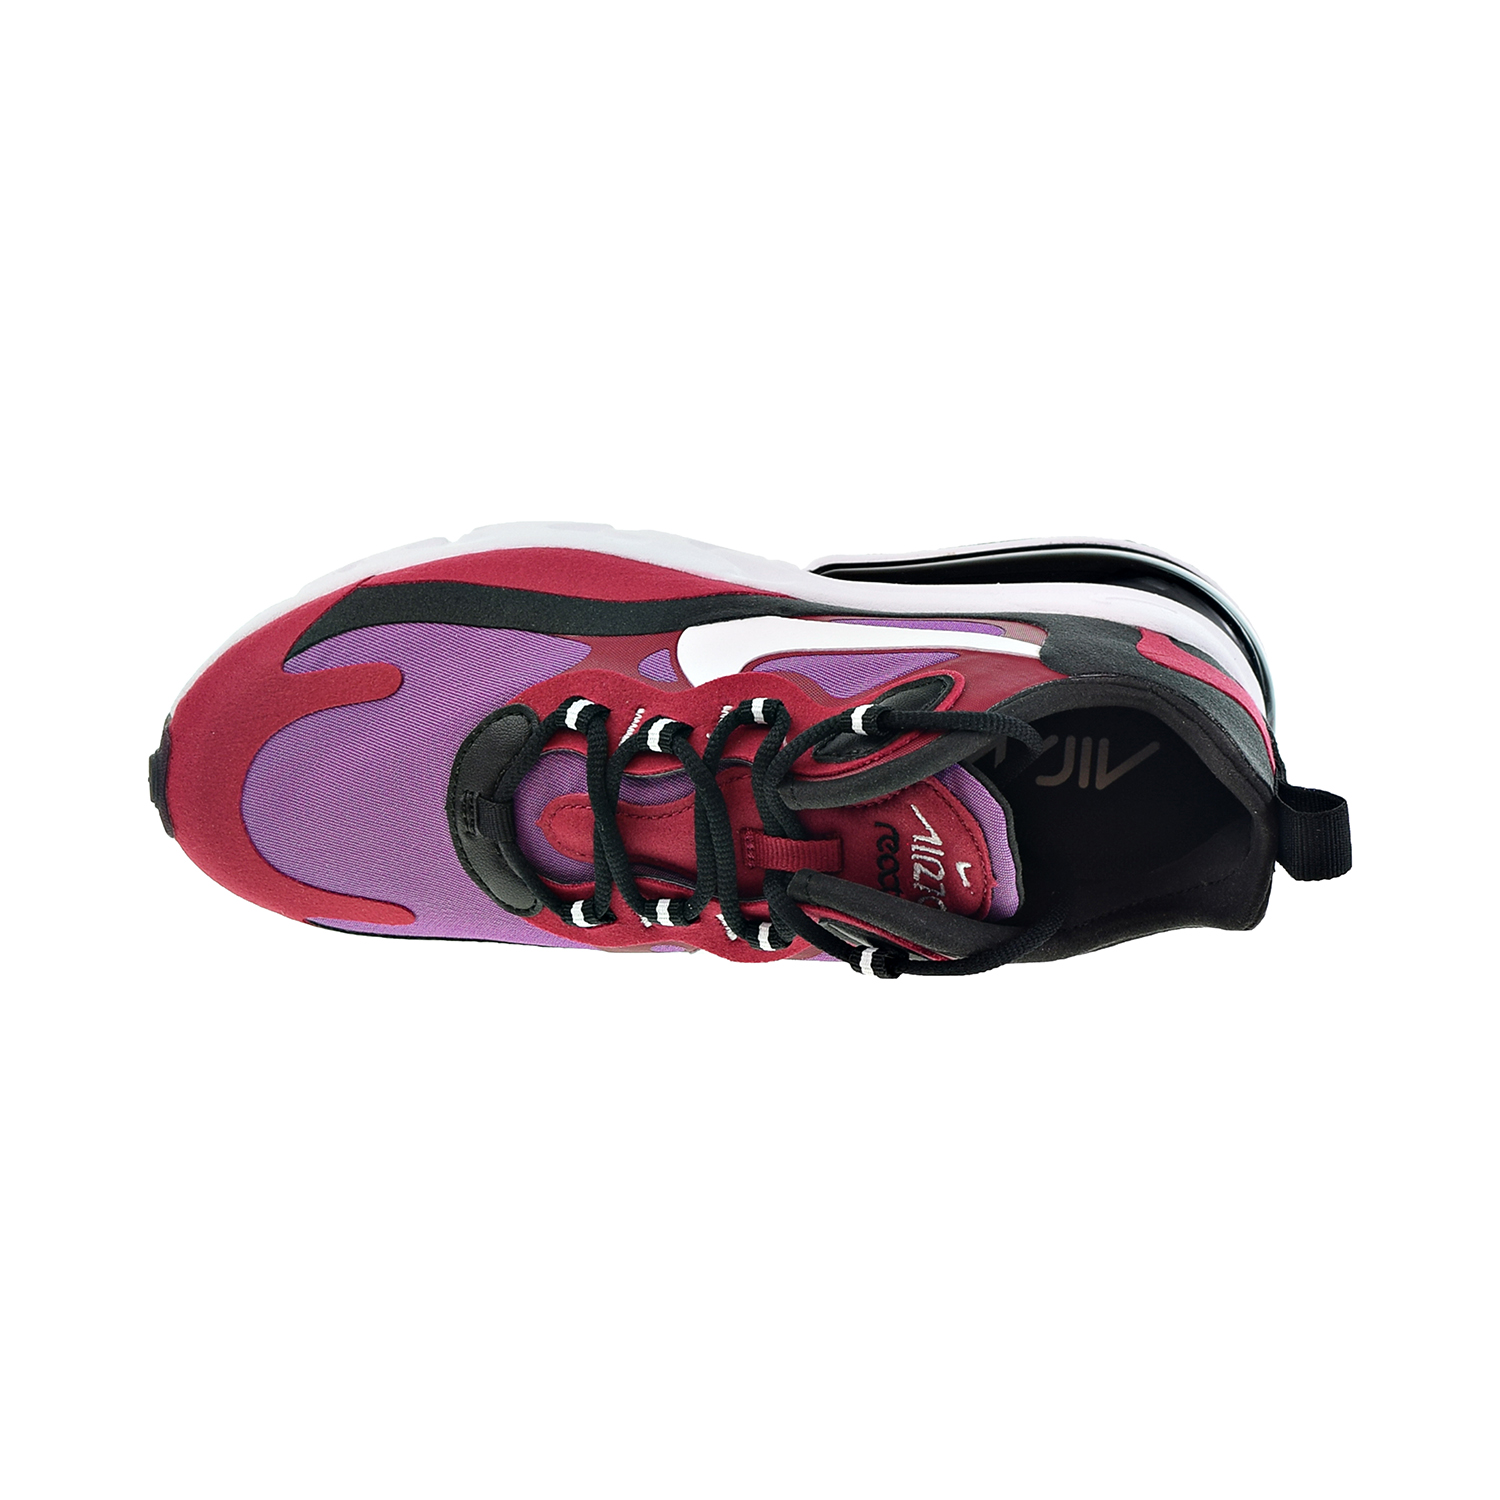 Nike Air Max 270 React Women's Shoes Noble Red-Black-Vivid Purple ci3899-600 - image 5 of 6